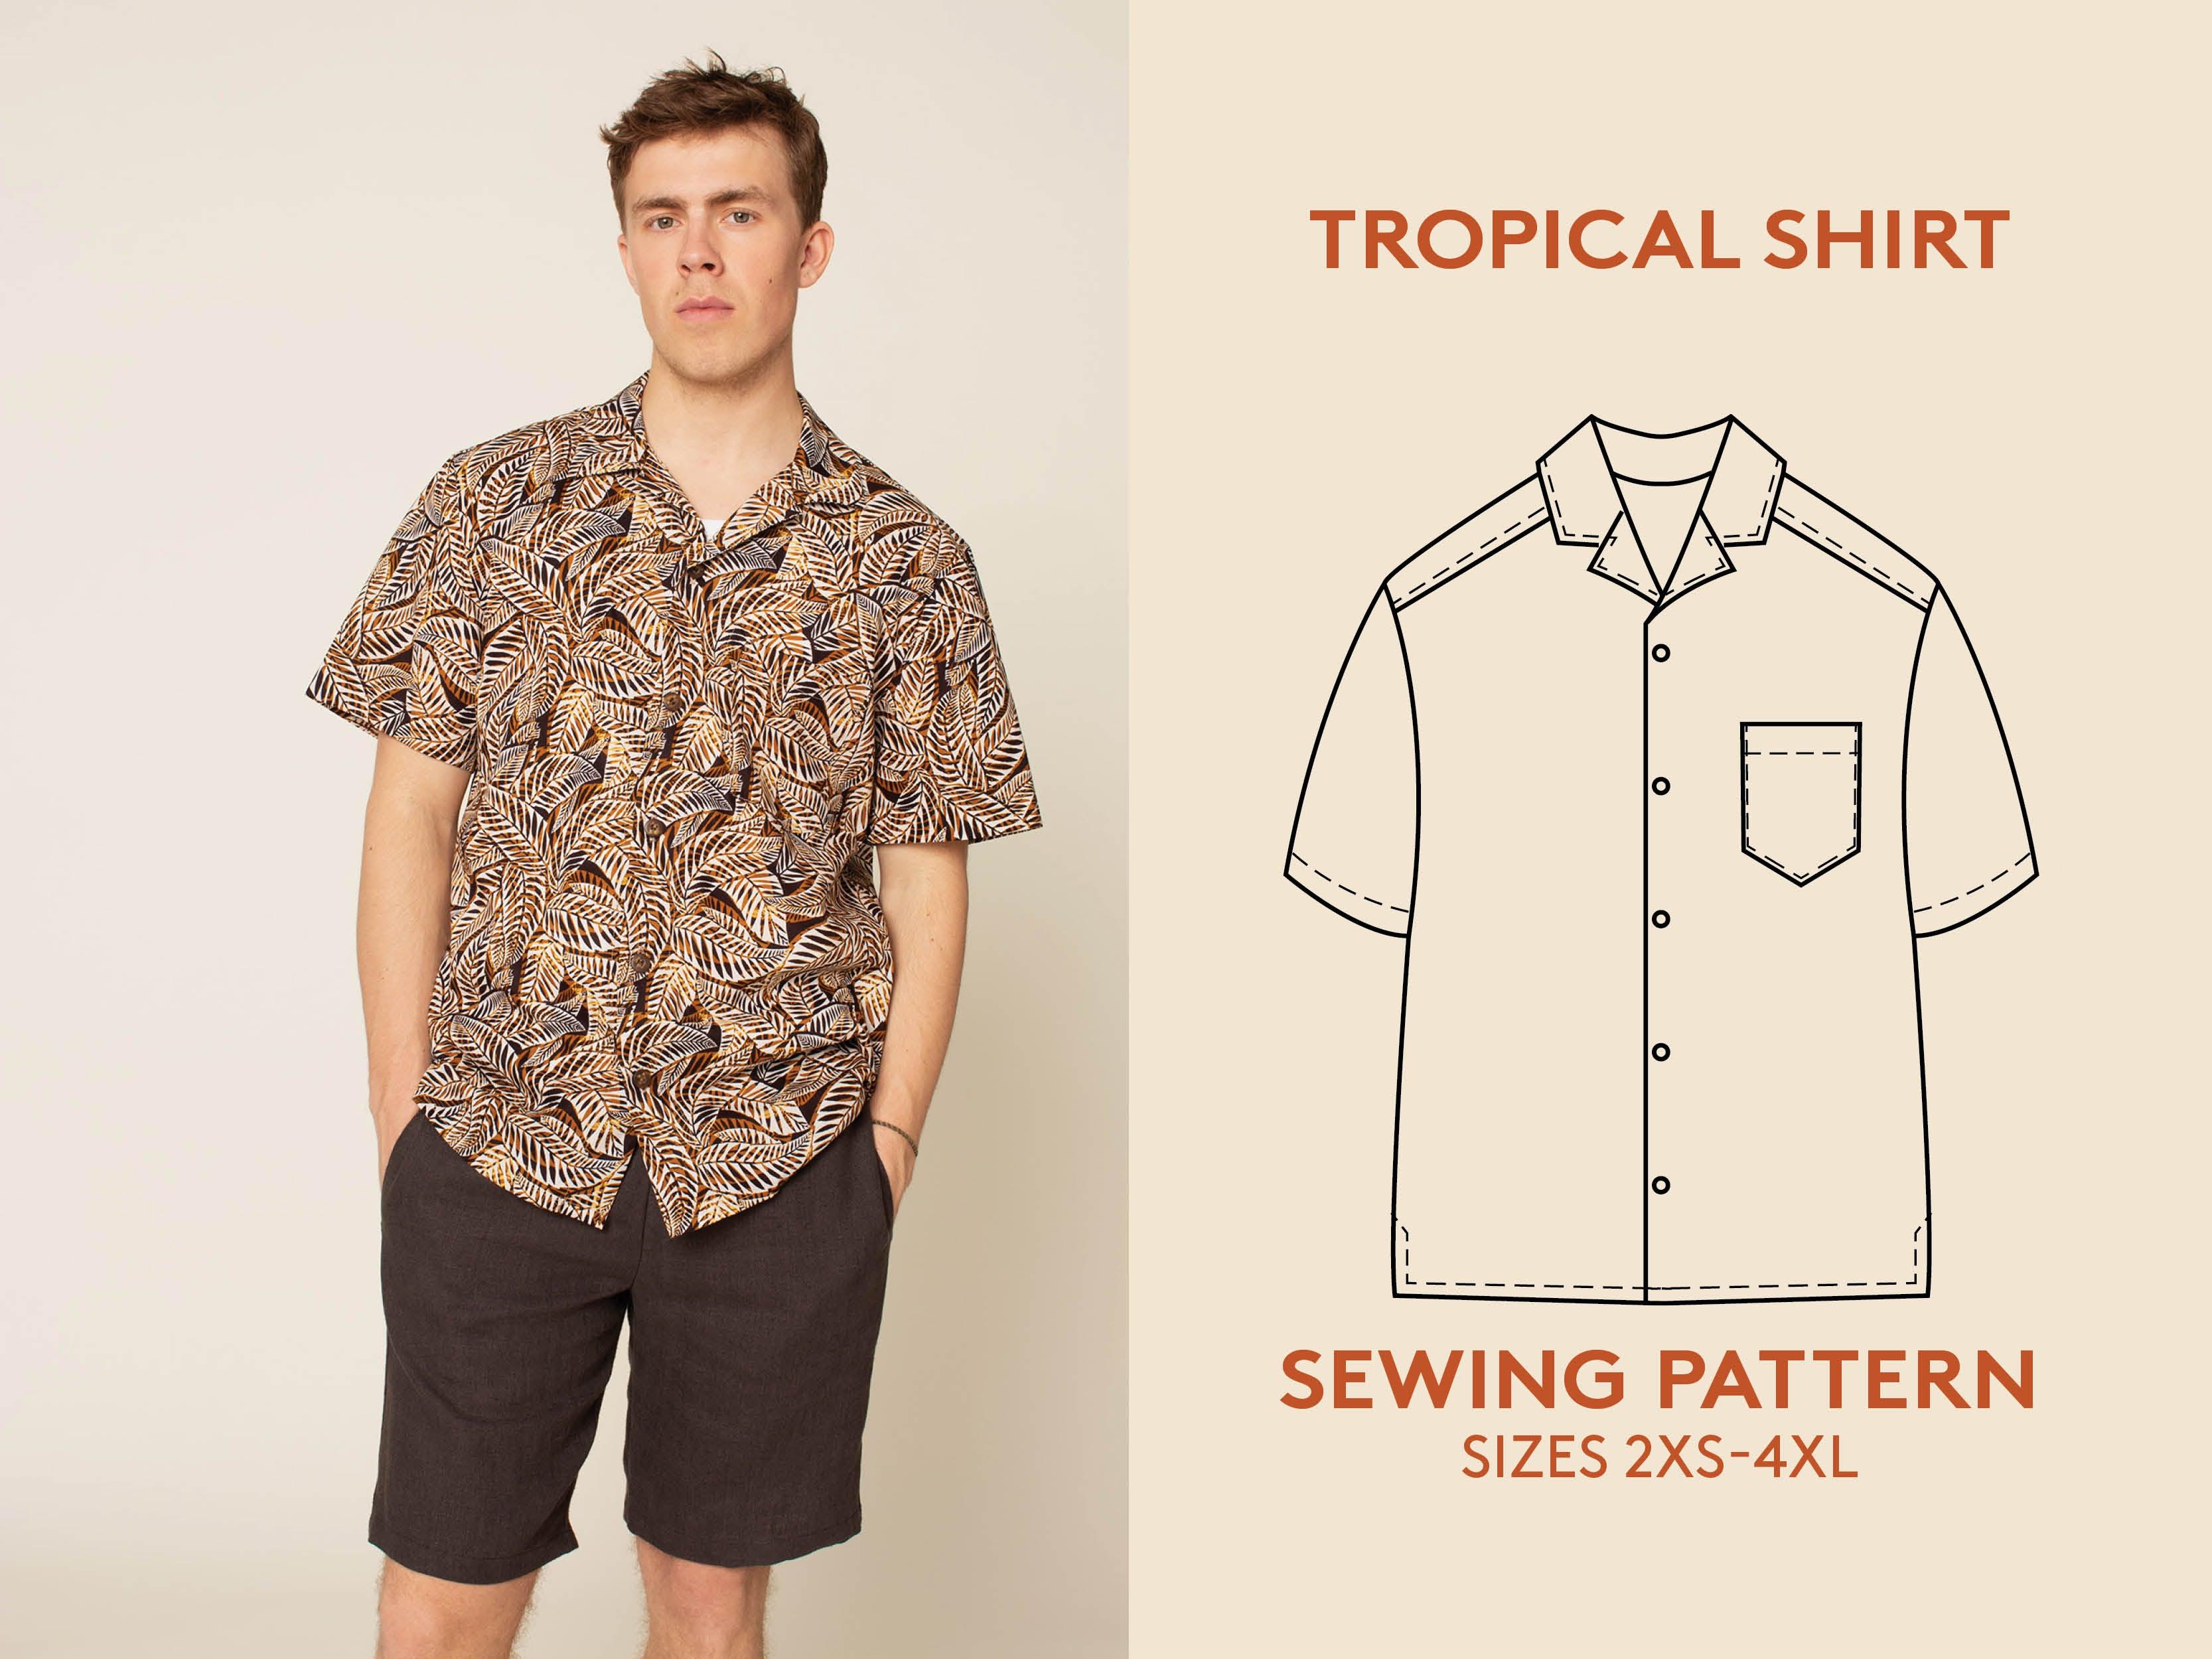 Men's Tropical shirt sewing pattern